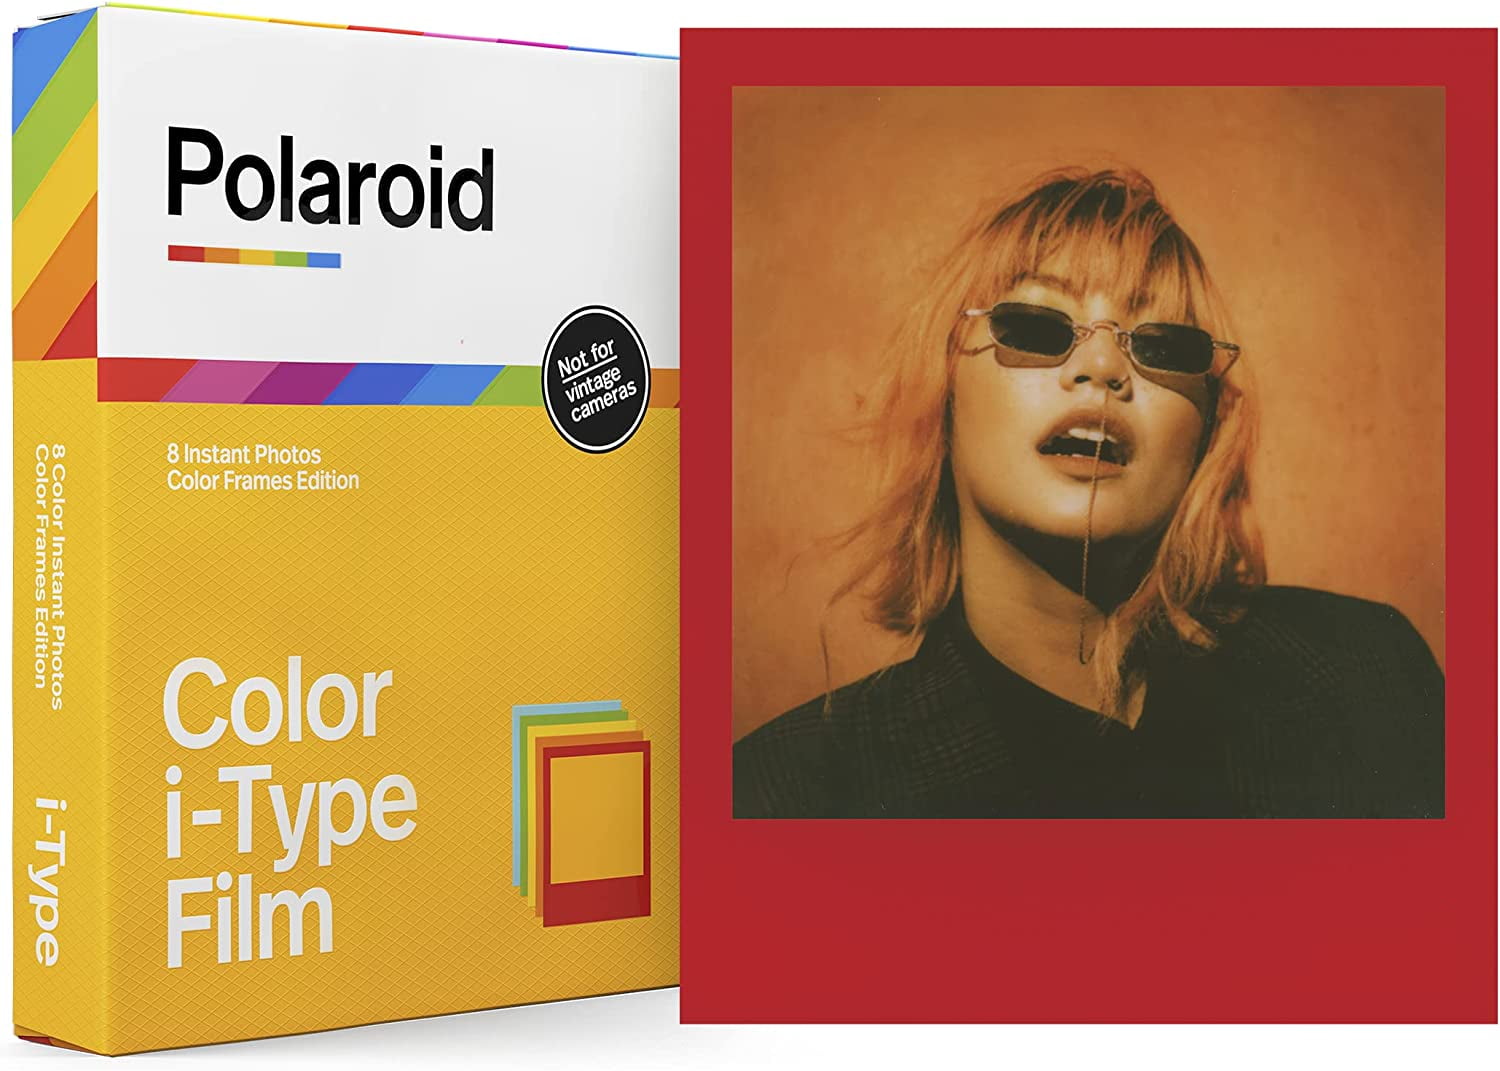 Buy Polaroid Now i-Type Instant Camera - Orange online Worldwide